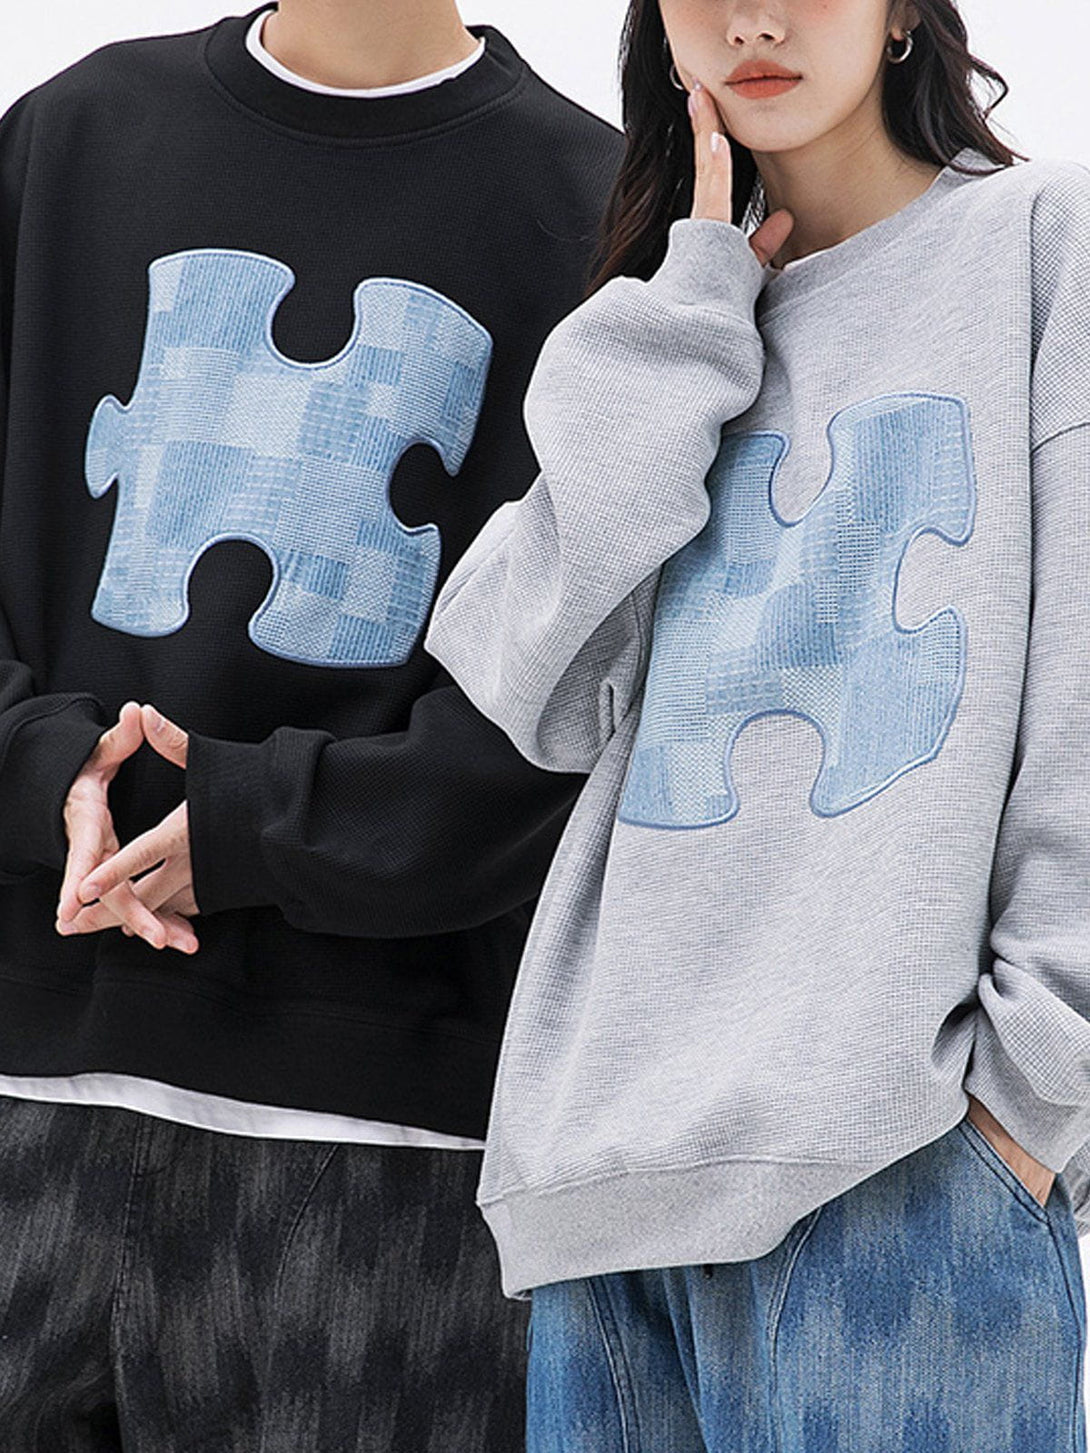 Majesda® - Puzzle Patch Sweatshirt outfit ideas streetwear fashion